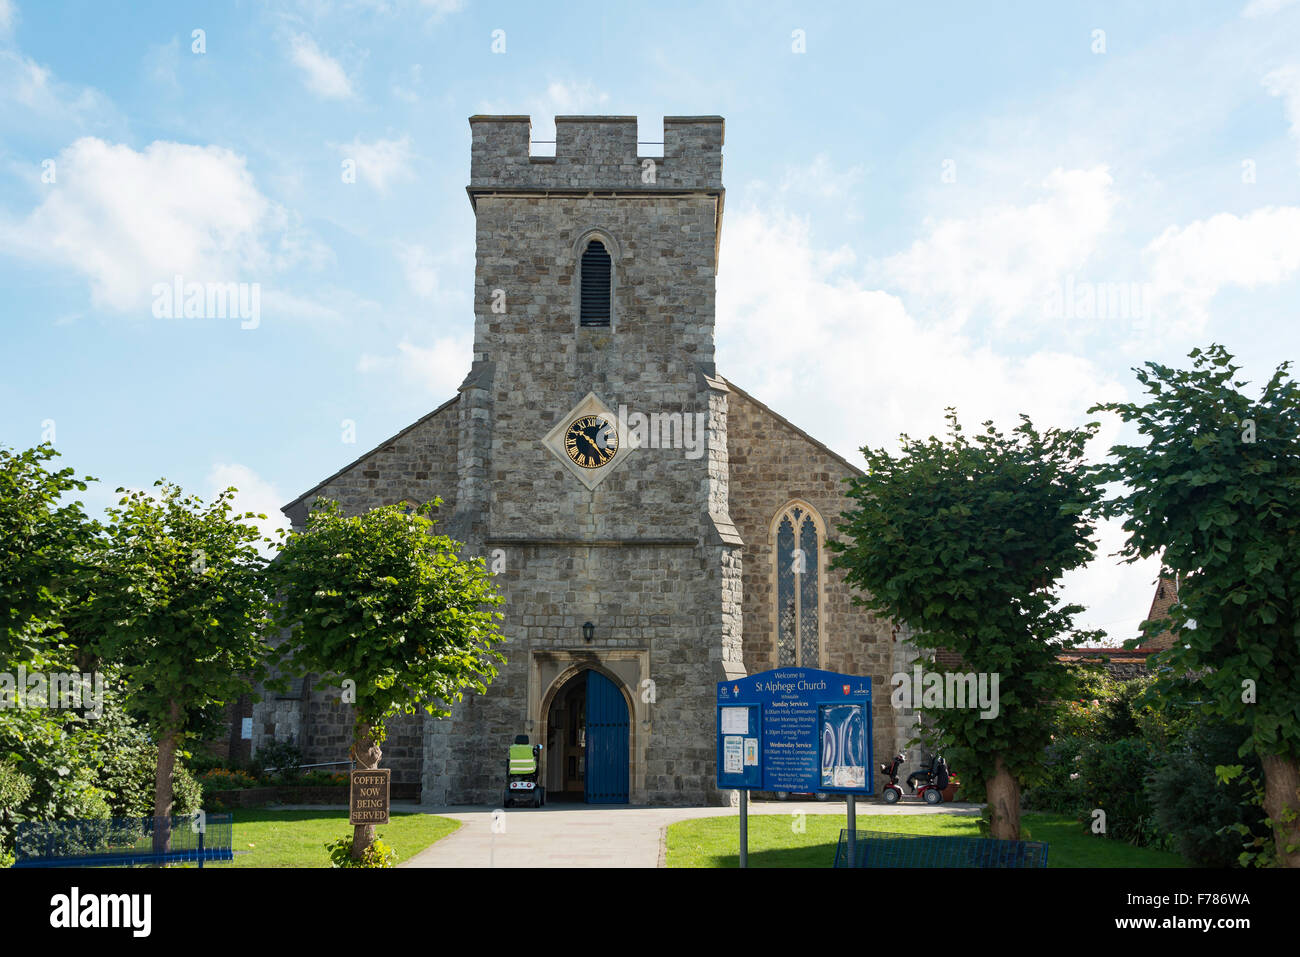 St Alphege Church, High Street, Whitstable, Kent, England, United Kingdom Stock Photo